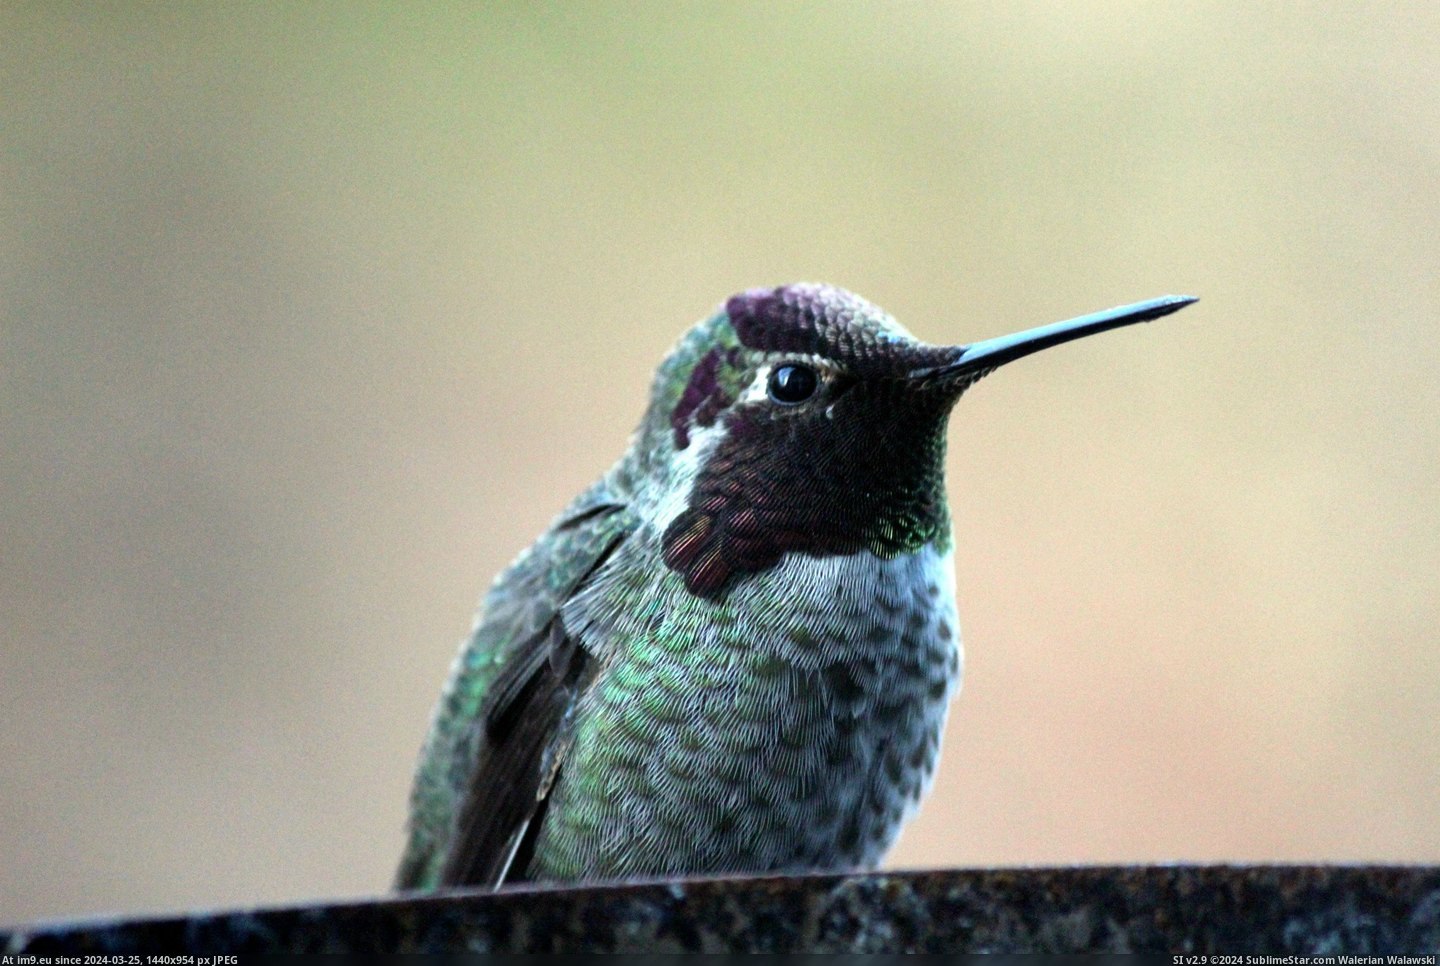 #Was #Morning #Showing #Changed #Angle #Hummingbird #Iridescent #Off #Head #Hood [Pics] A hummingbird showing off his iridescent hood this morning. The only thing that changed was the angle of his head. 2 Pic. (Obraz z album My r/PICS favs))